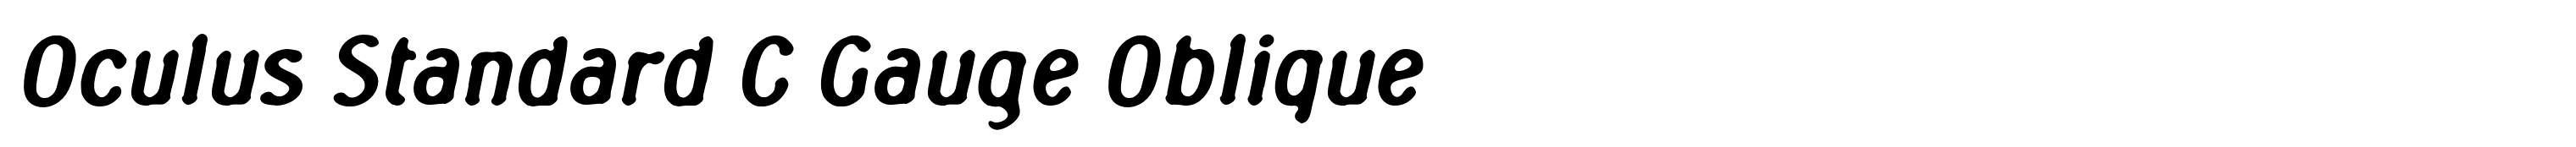 Oculus Standard C Gauge Oblique